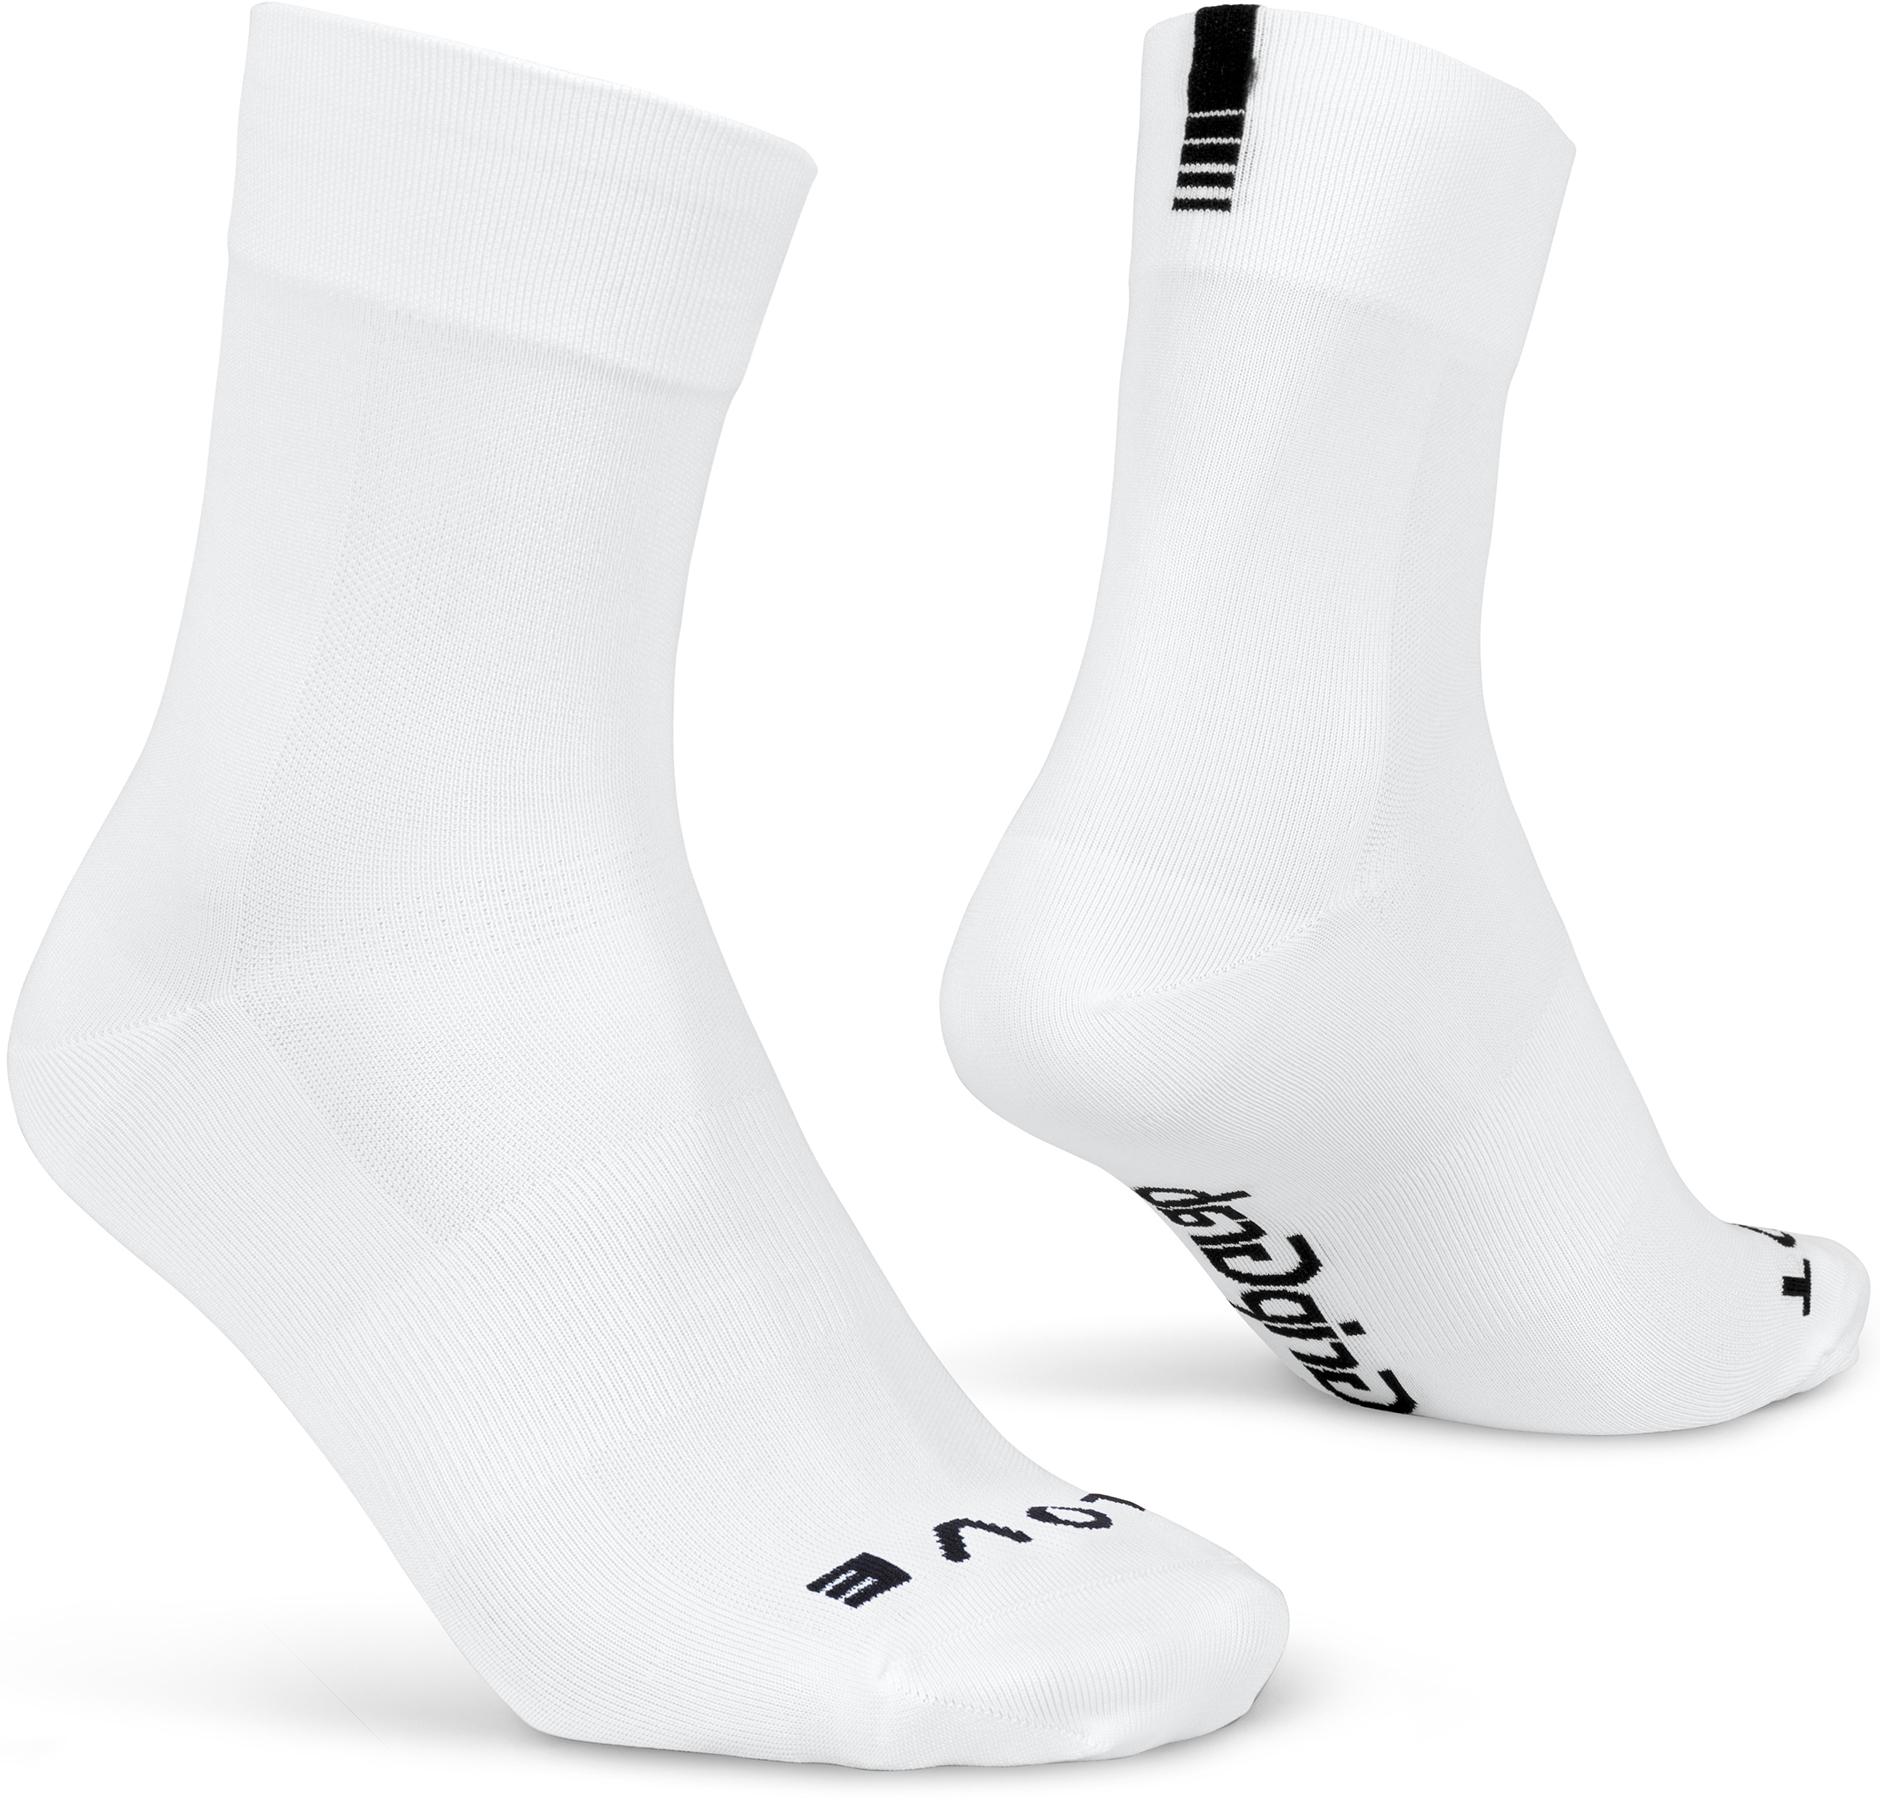 Gripgrab Lightweight Sl Socks - White